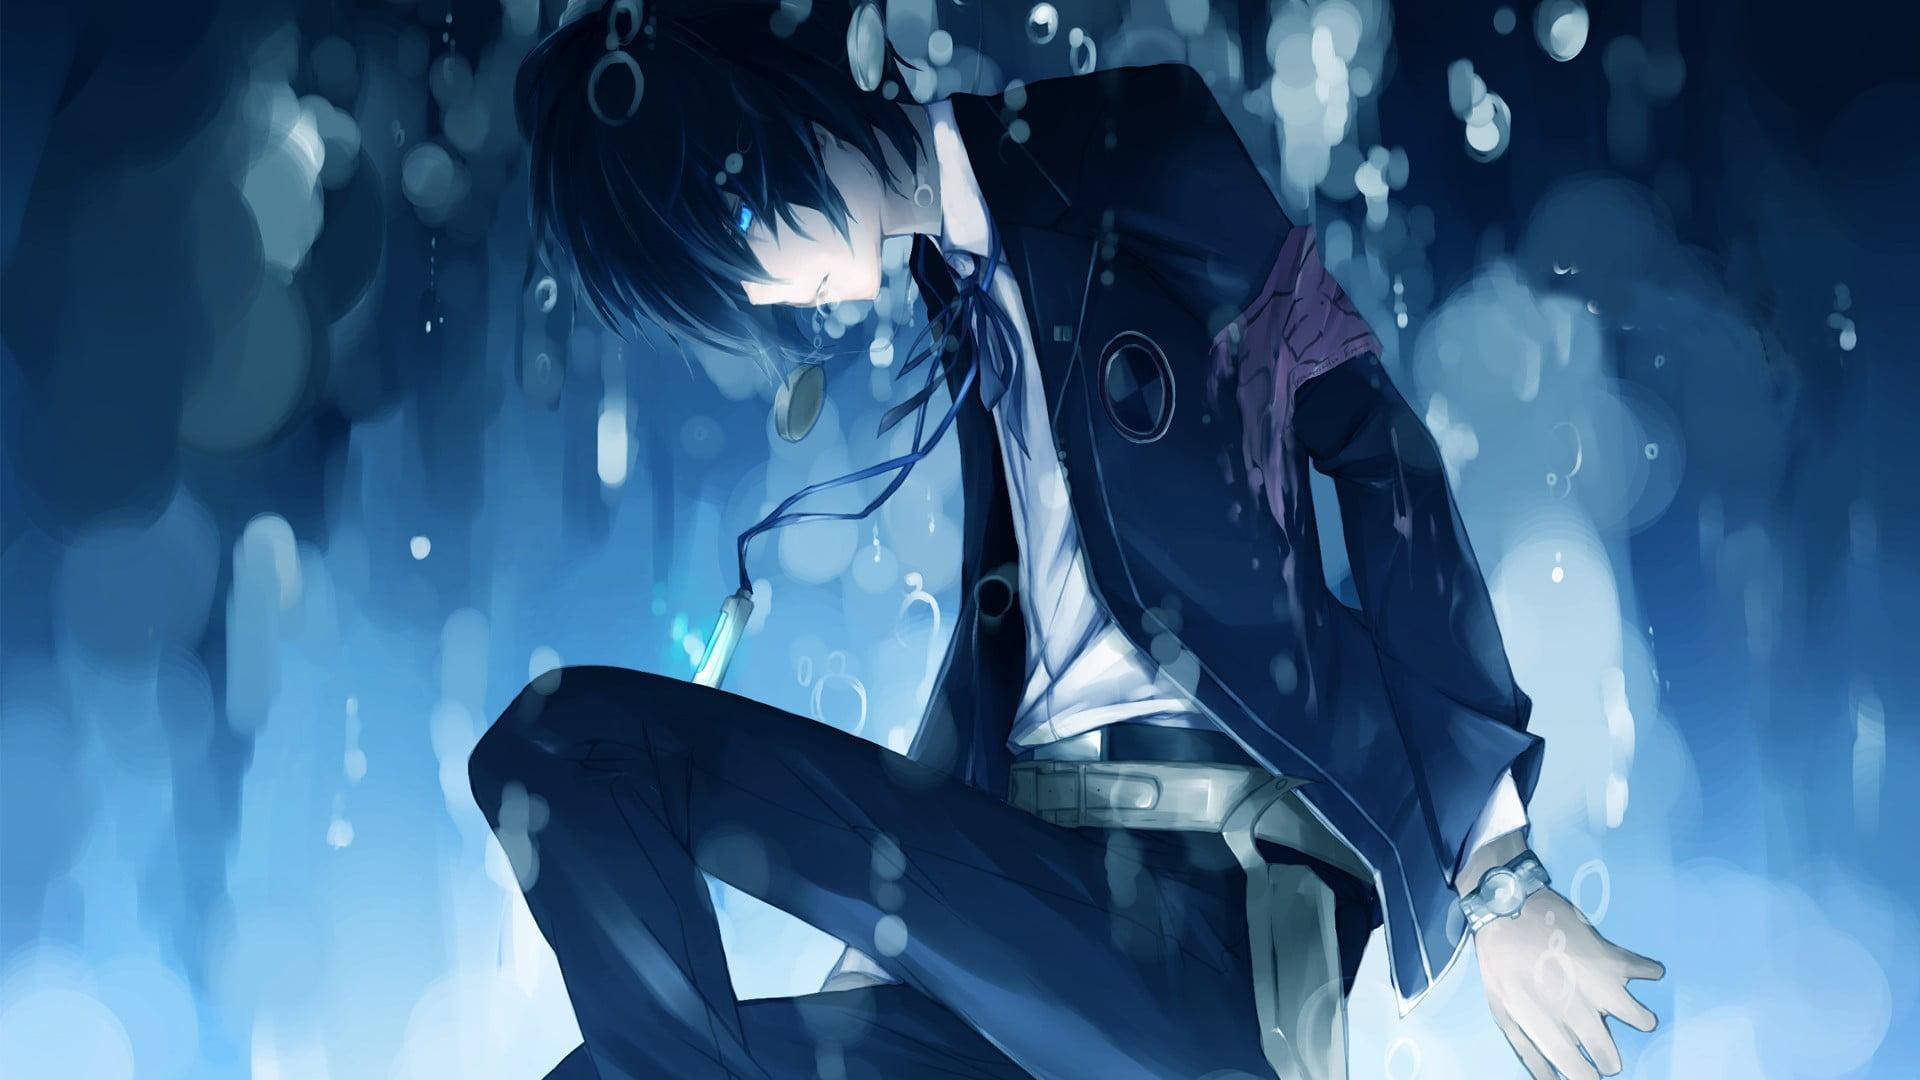 Sinking Anime Blue Boy Wallpaper